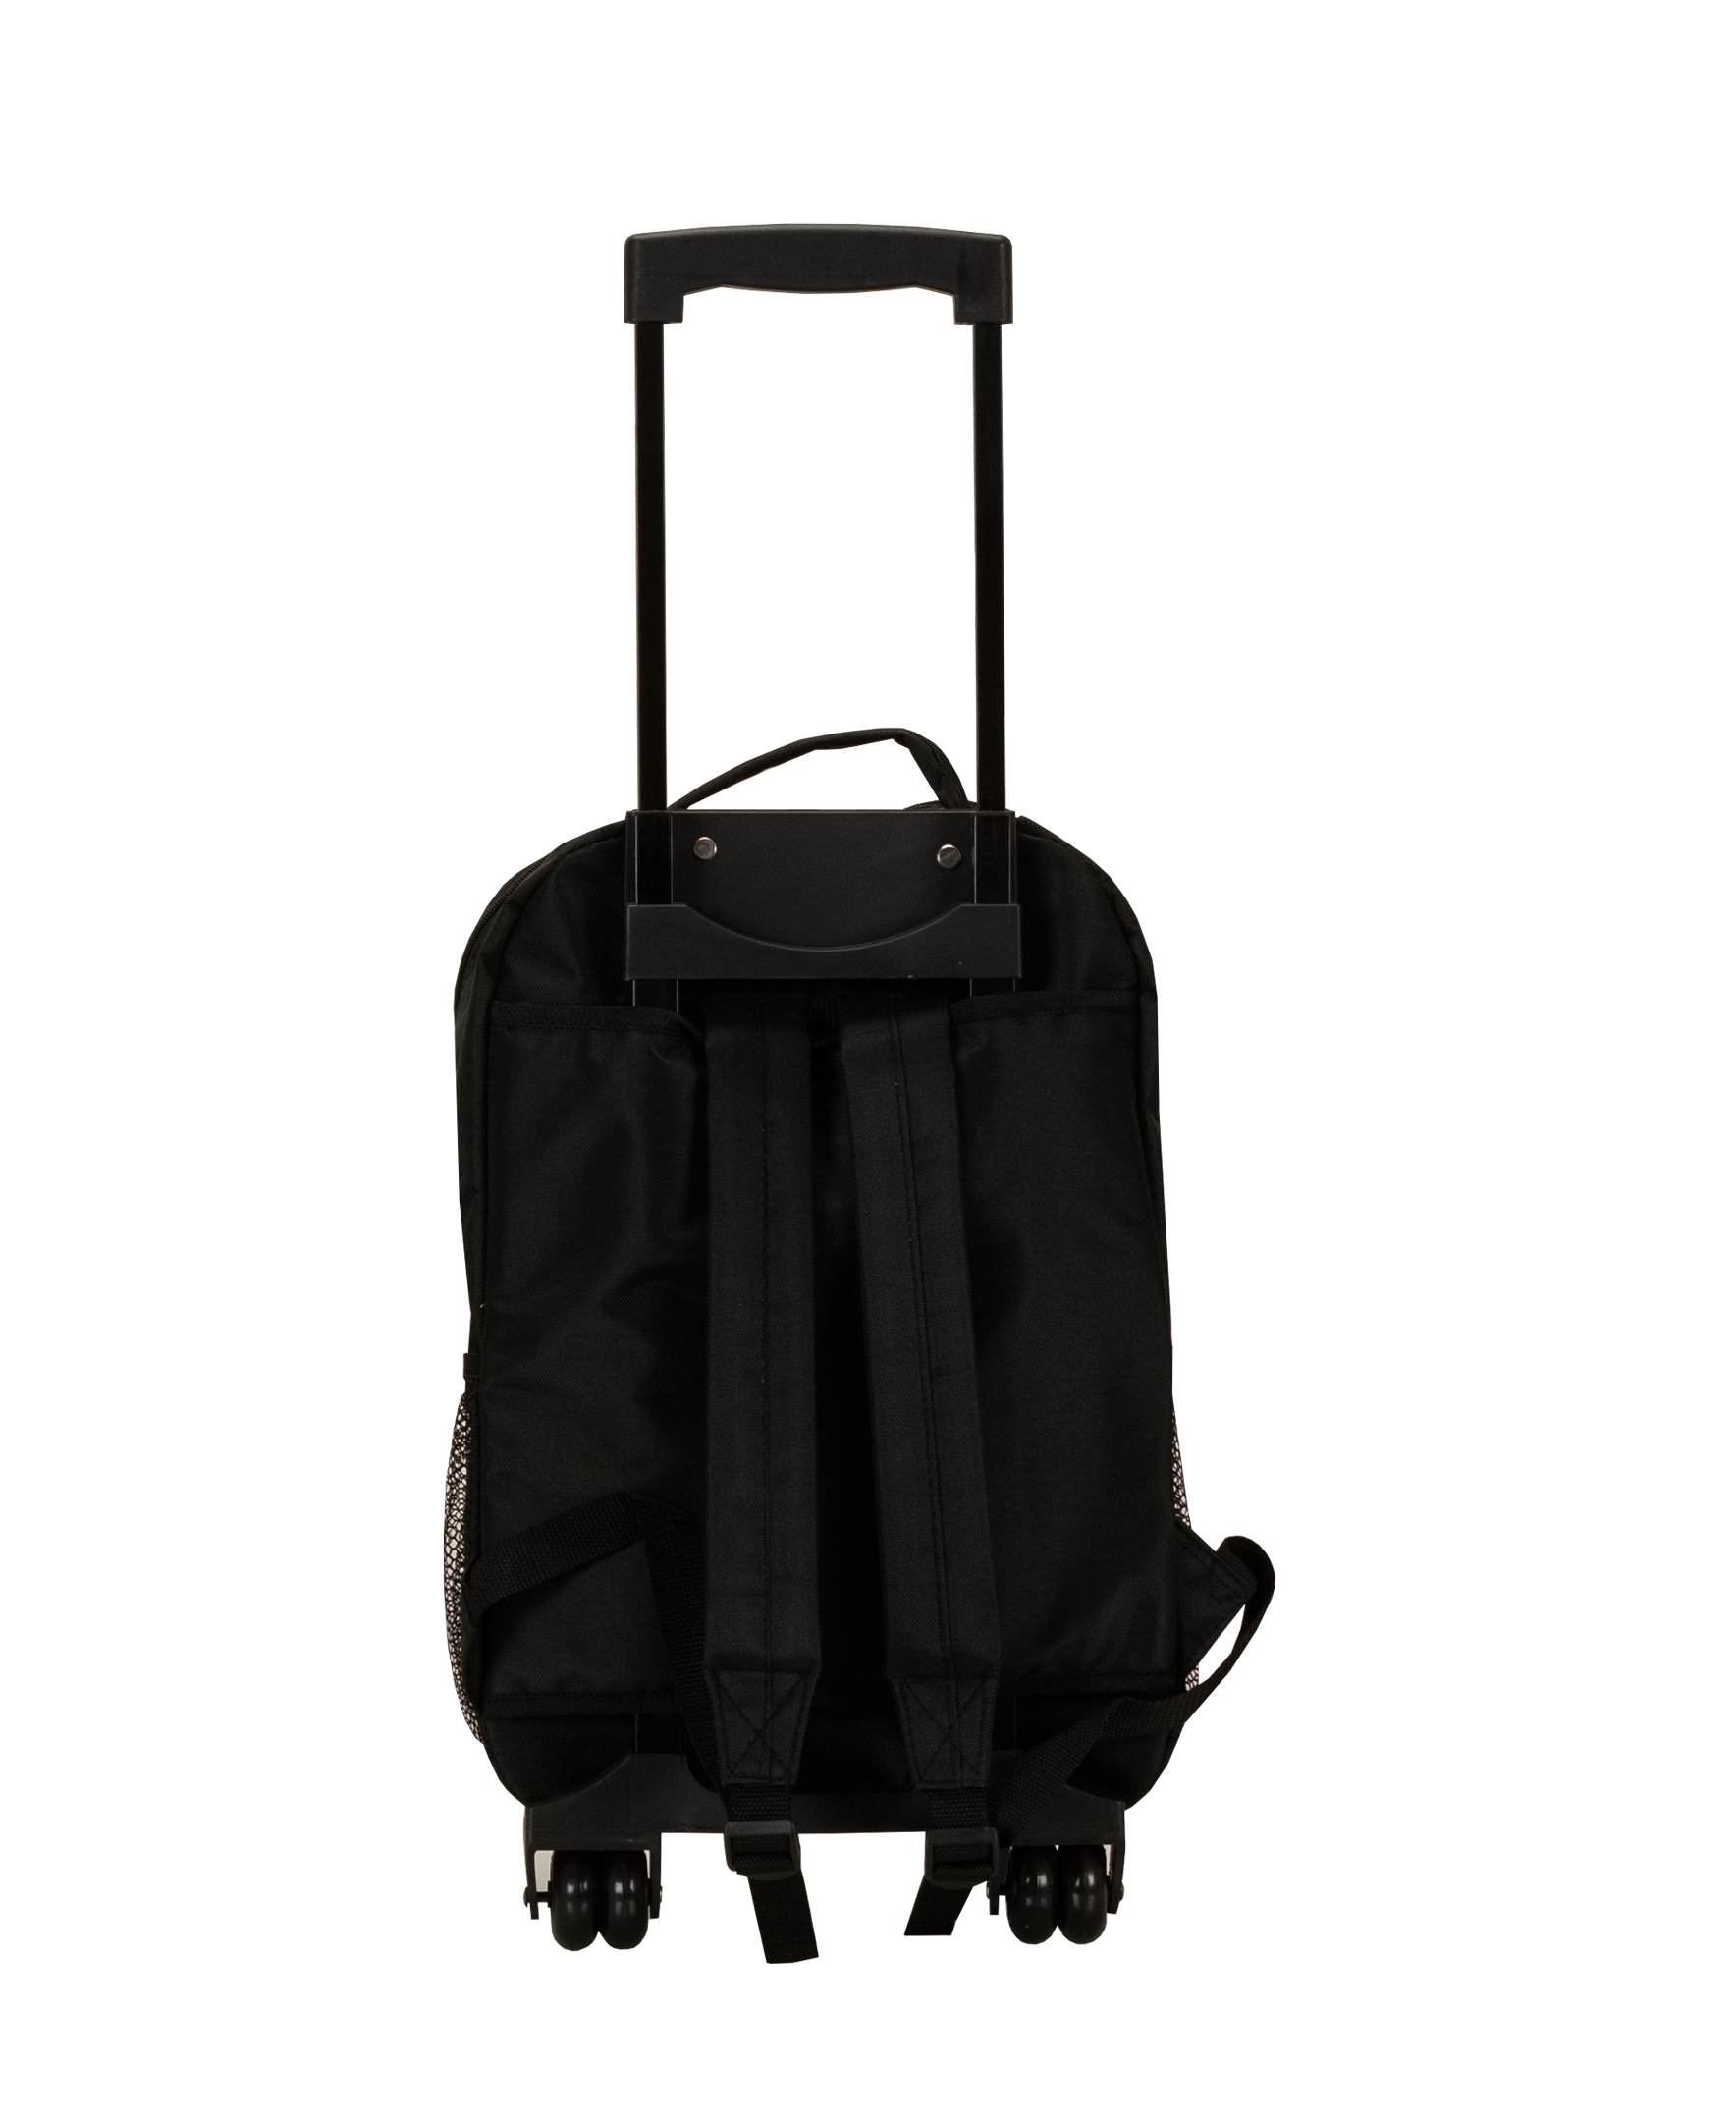 Rockland Unisex Luggage 17" Rolling Backpack R01 Black - image 3 of 4